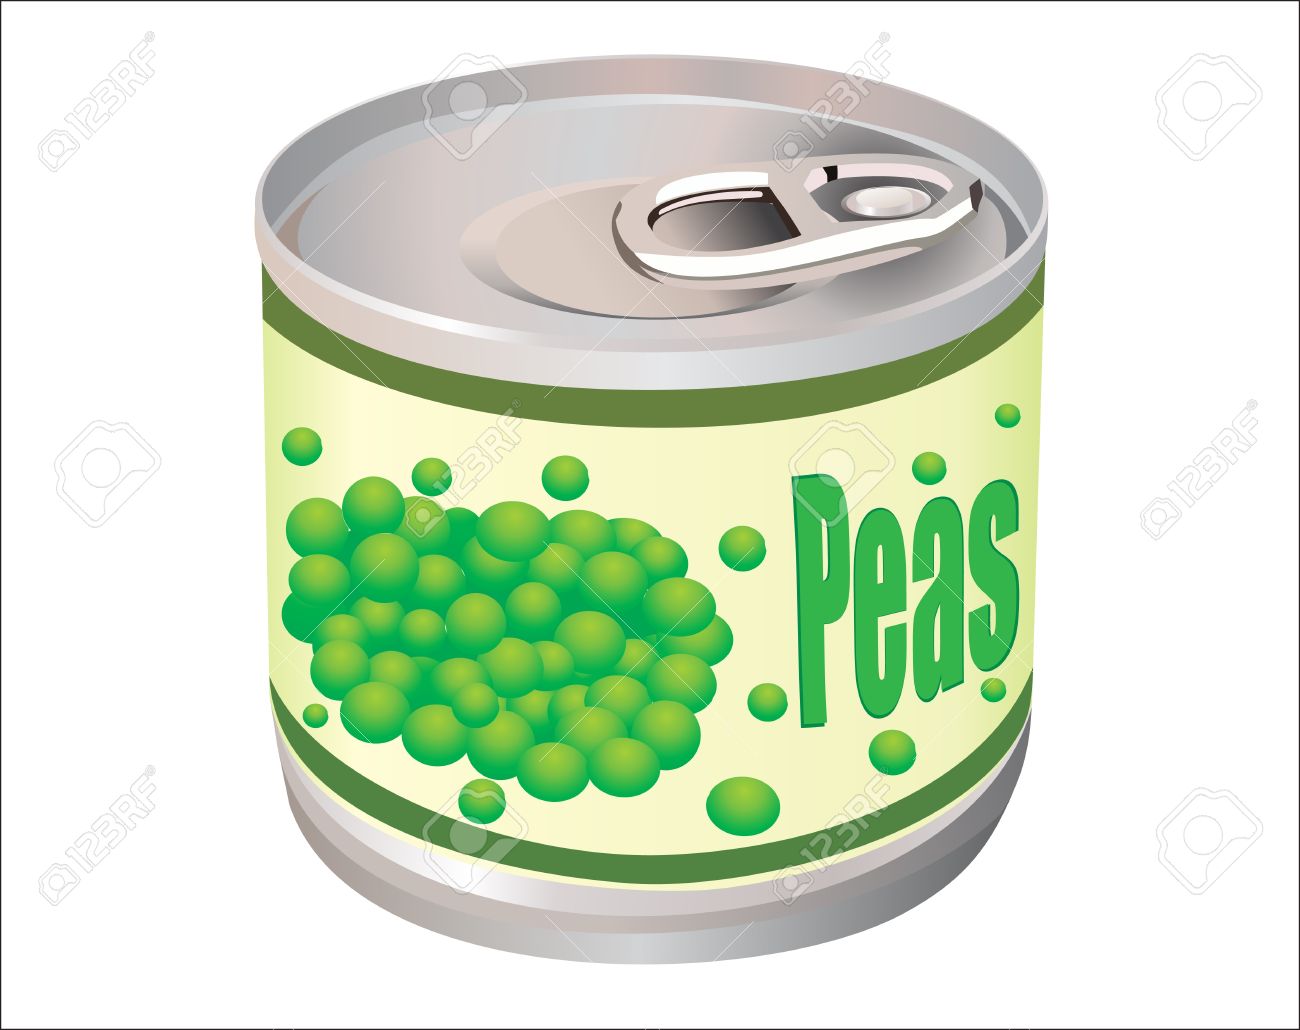 peas clipart canned pea